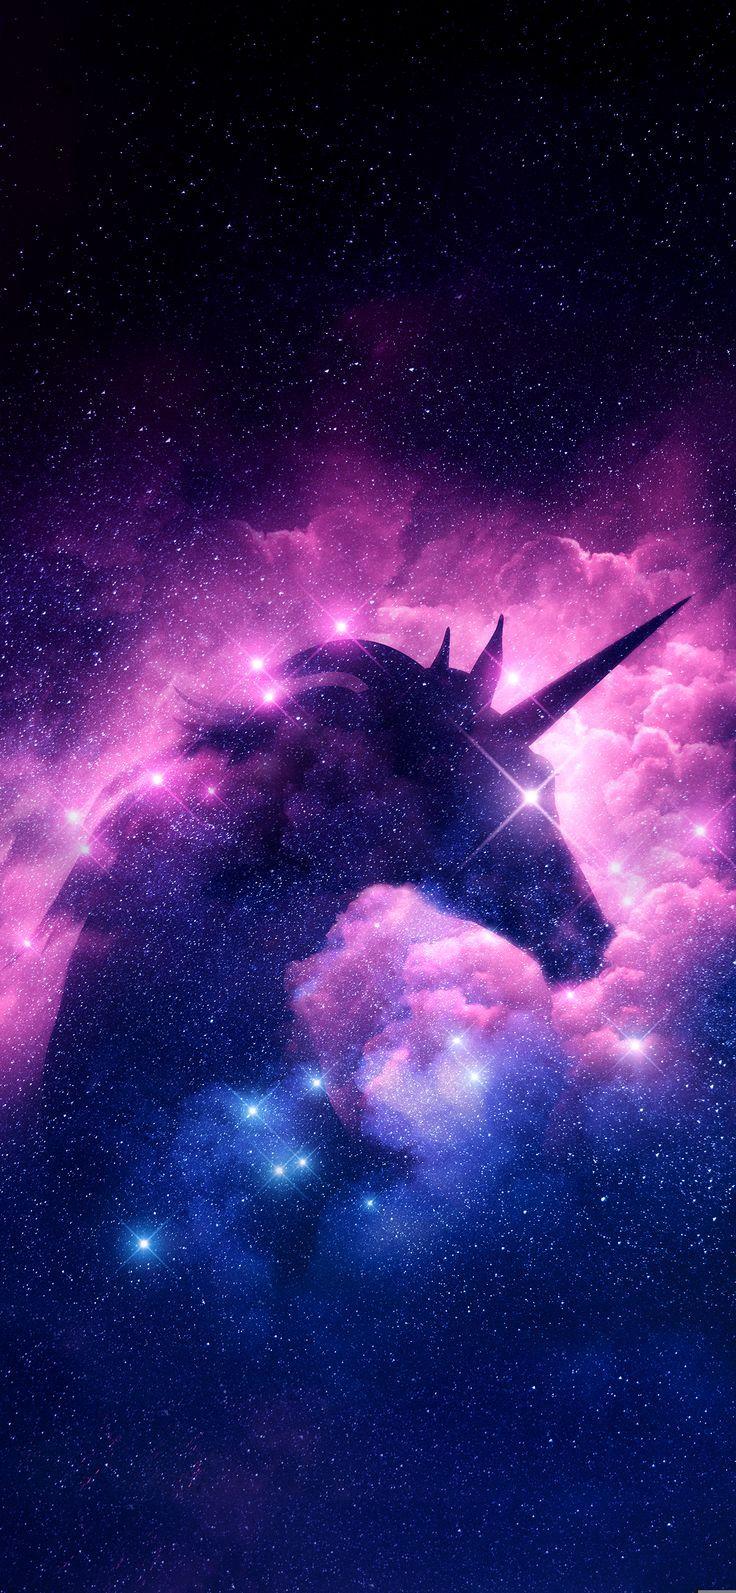 736x1593 Unicorn Galaxy Hình nền iPhone #galaxy #iphone #unicorn